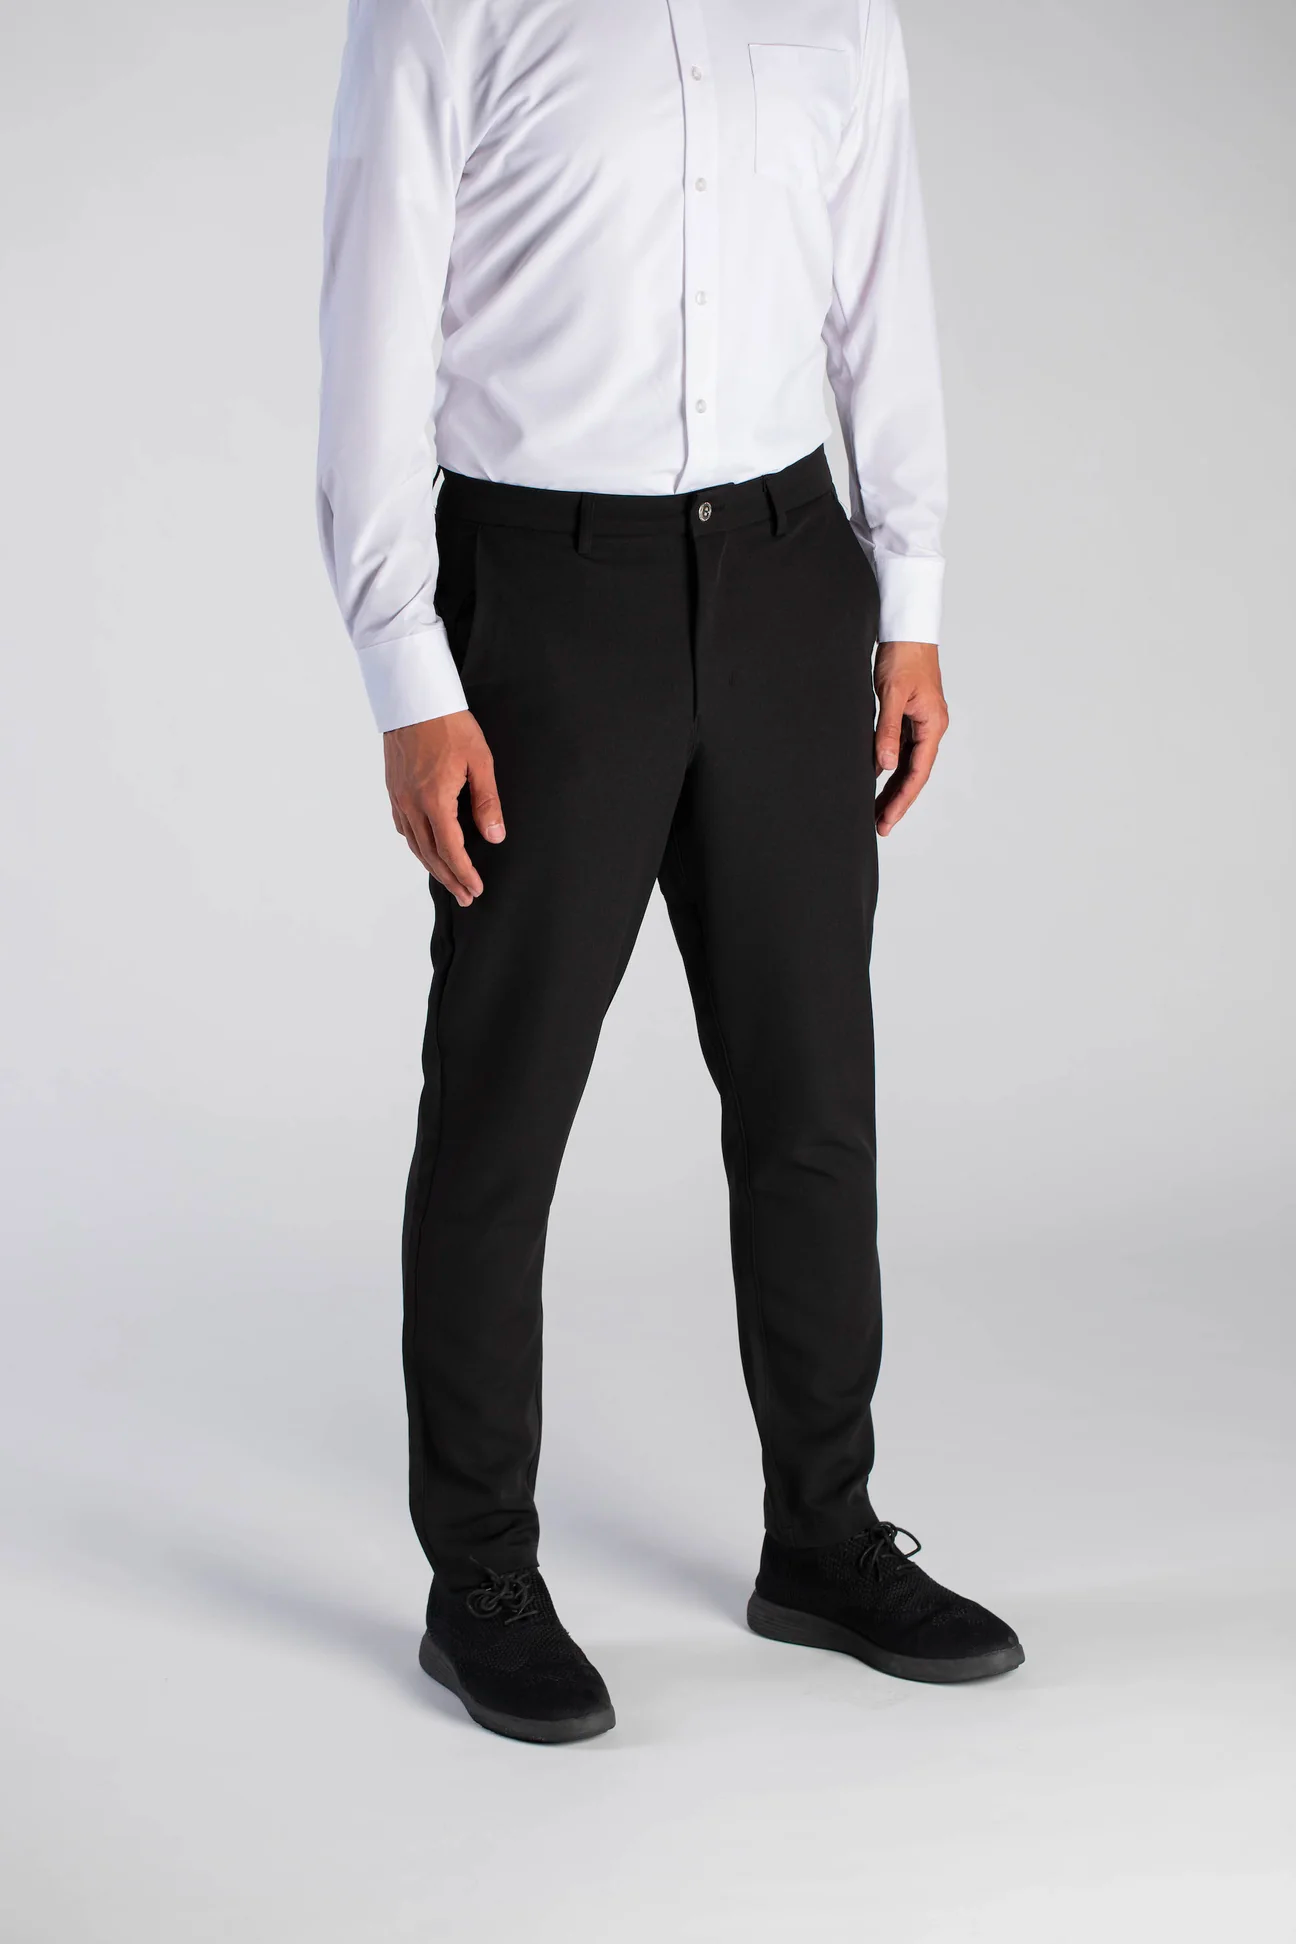 Buy London Bridge Black Slim Fit Formal Trousers - Trousers for Men 970189  | Myntra